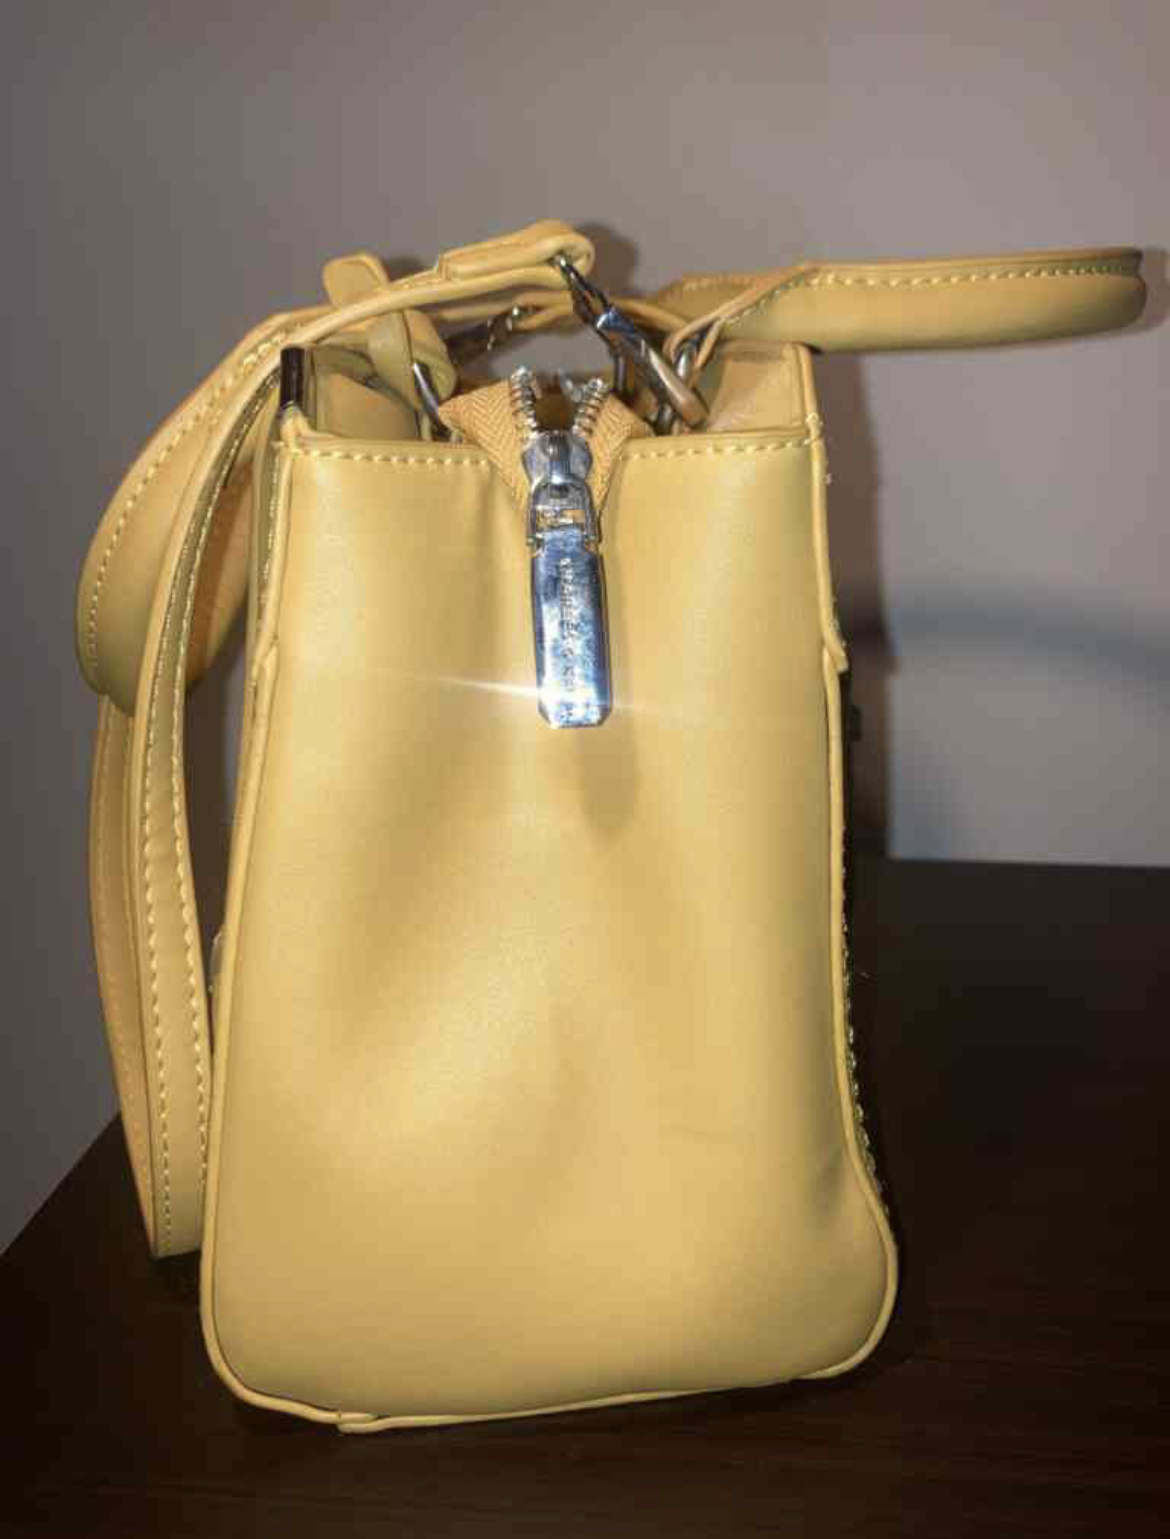 Women's Handbags & Purses for sale in Kochi, India | Facebook Marketplace